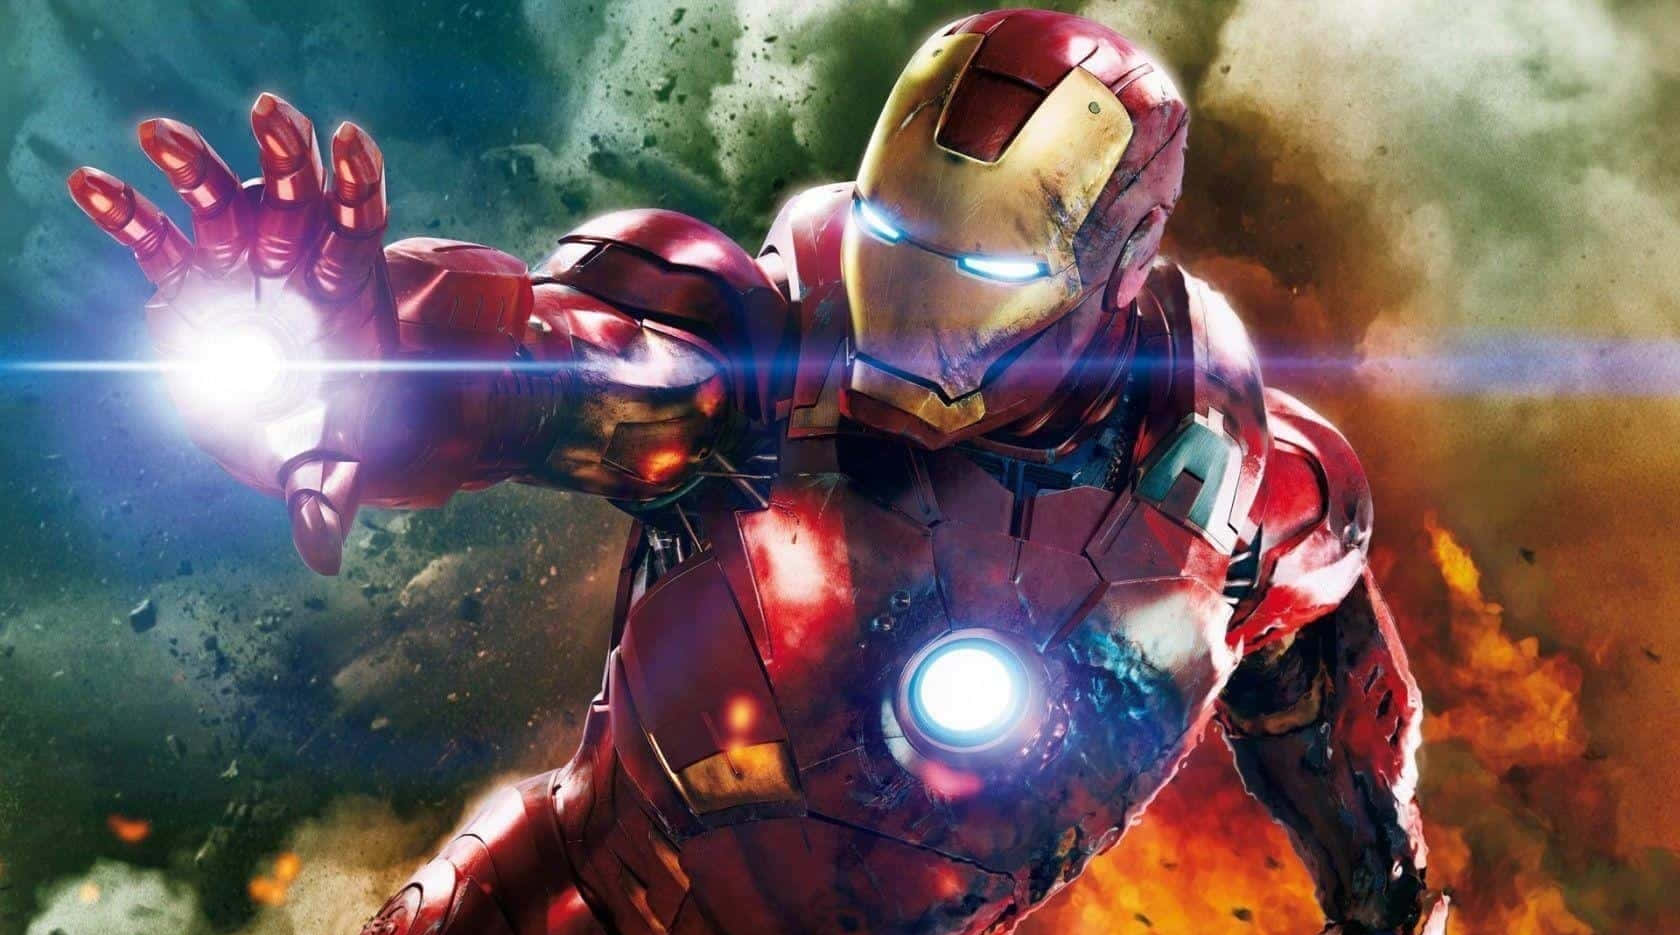 Iron Man 3 brings Tony Stark's revolutionary suit of armor to the big screen. Wallpaper